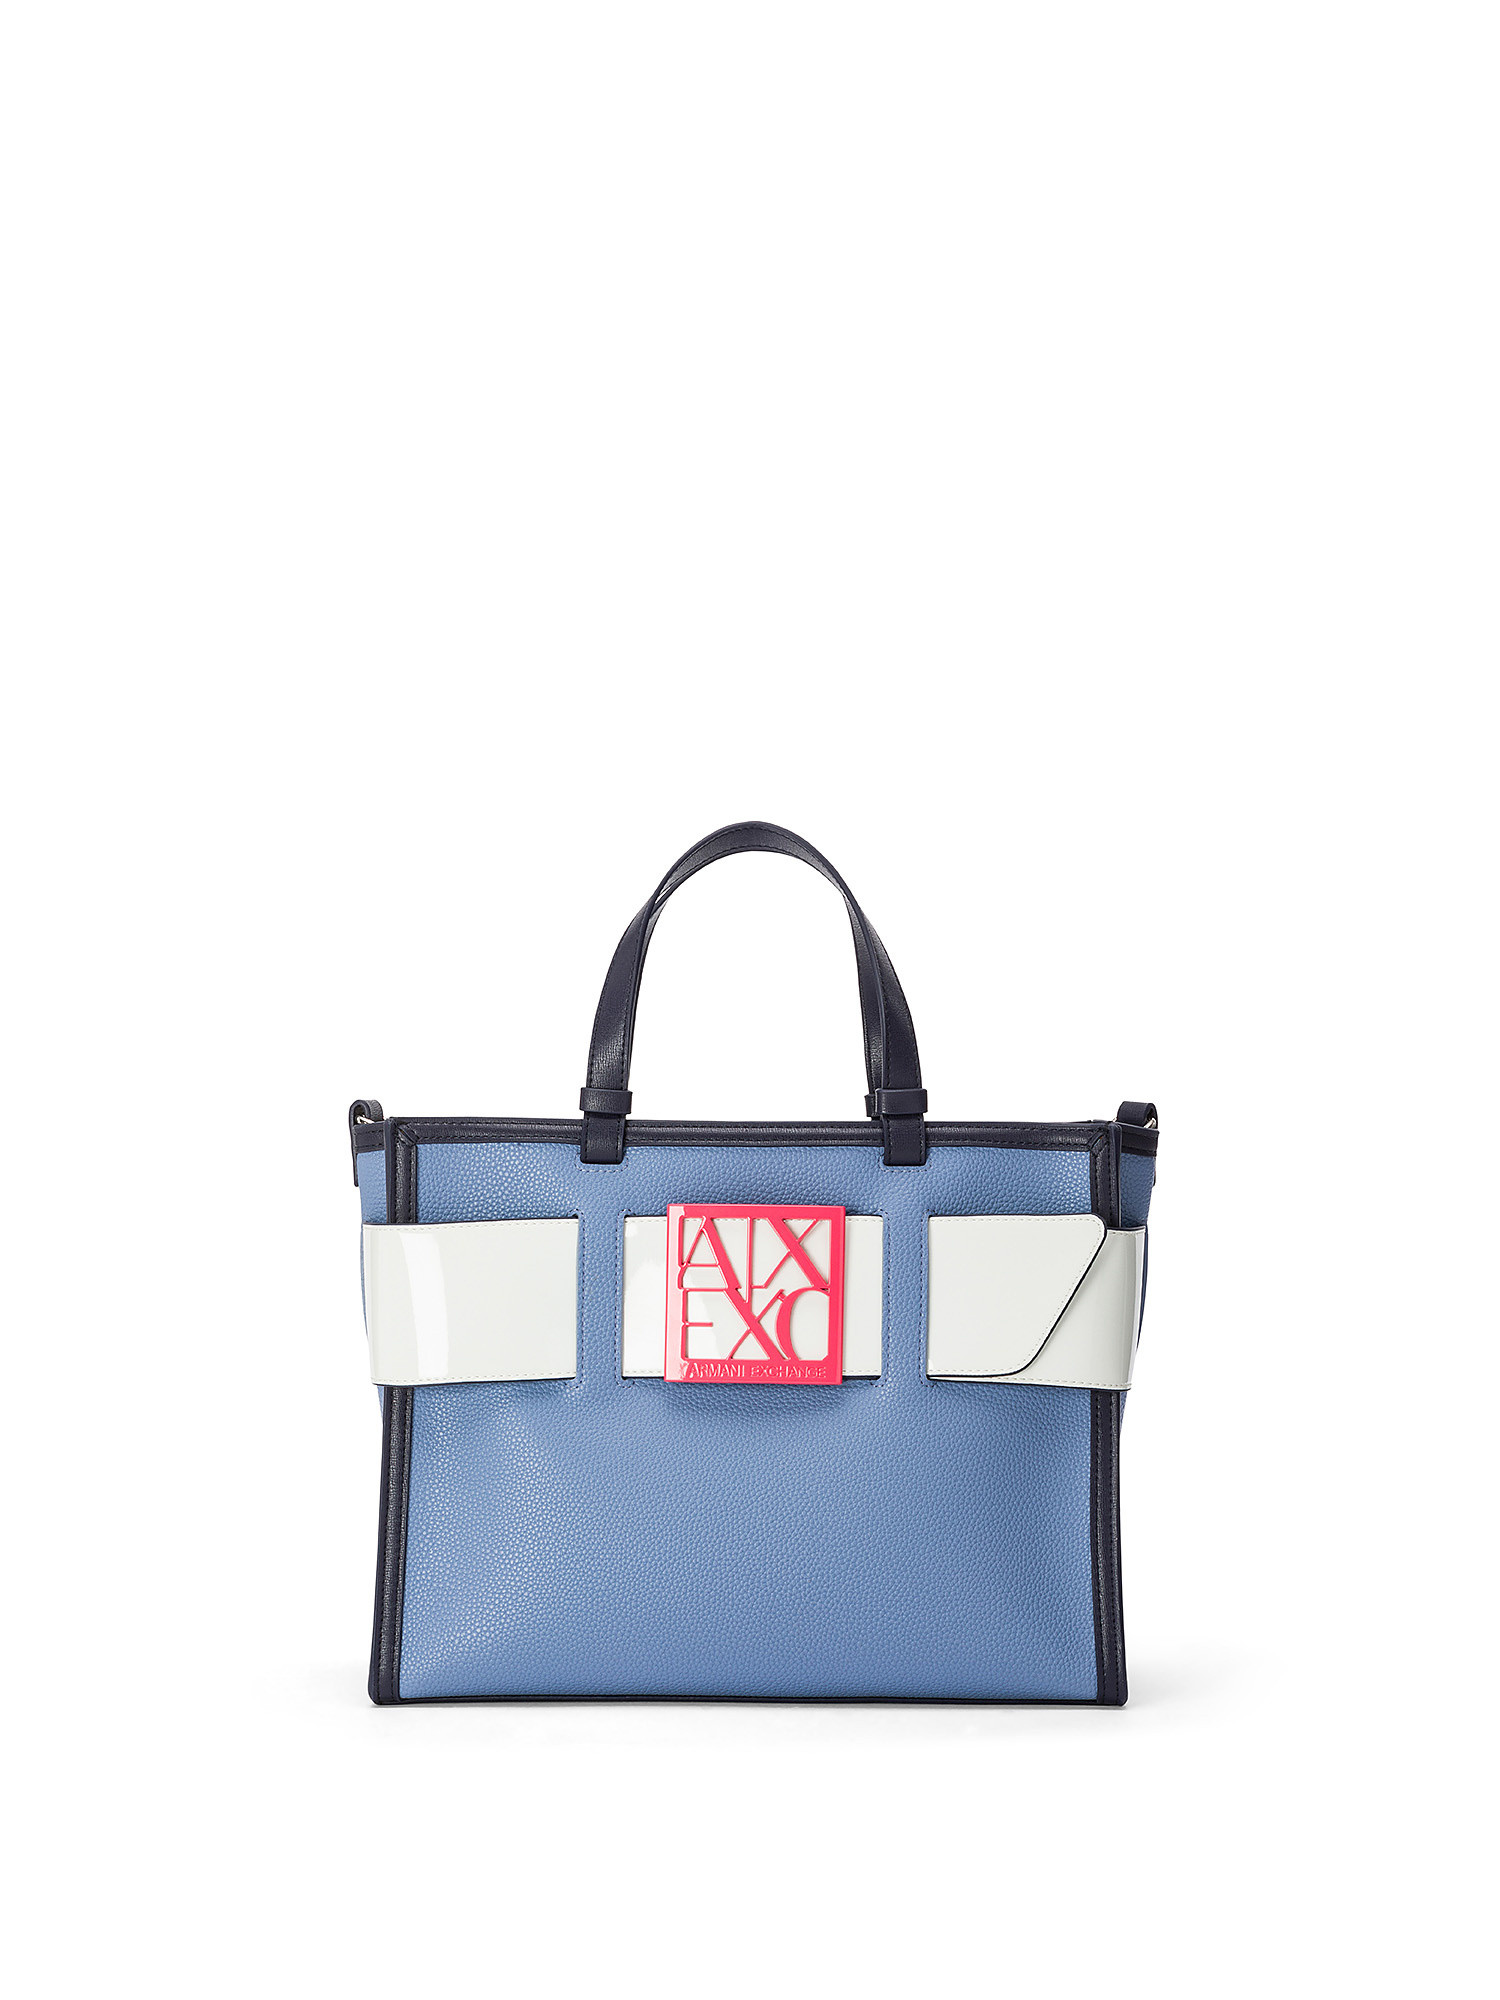 Armani Exchange - Large tote bag with logo, Light Blue, large image number 0